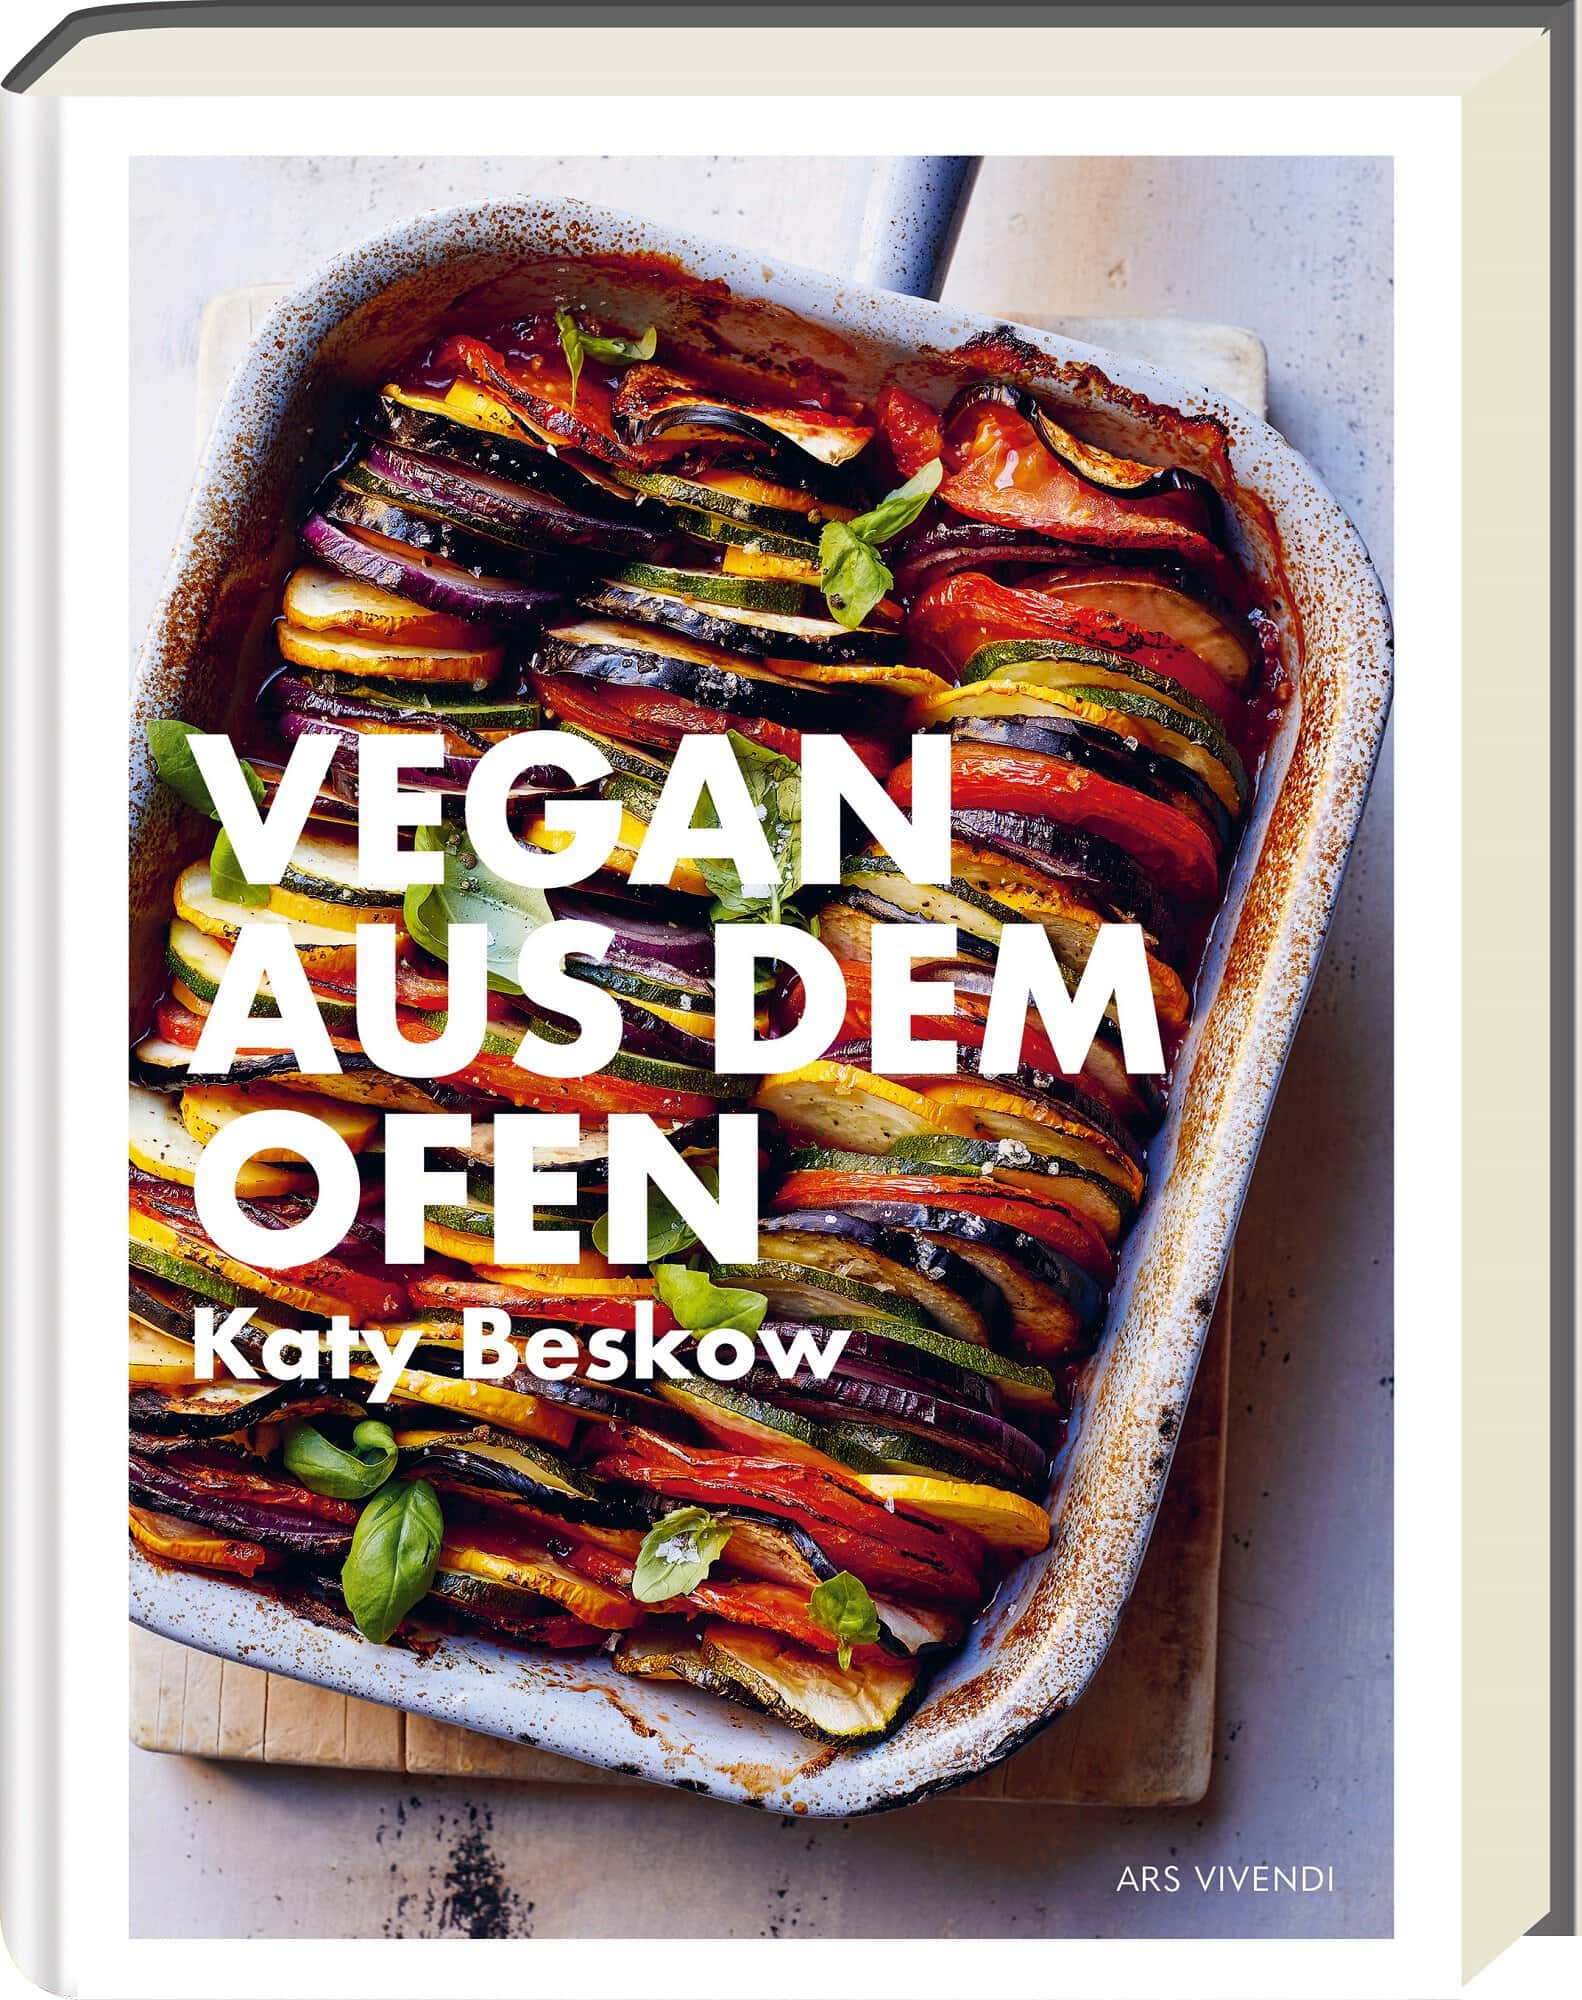 Buchcover "Vegan aus dem Ofen"